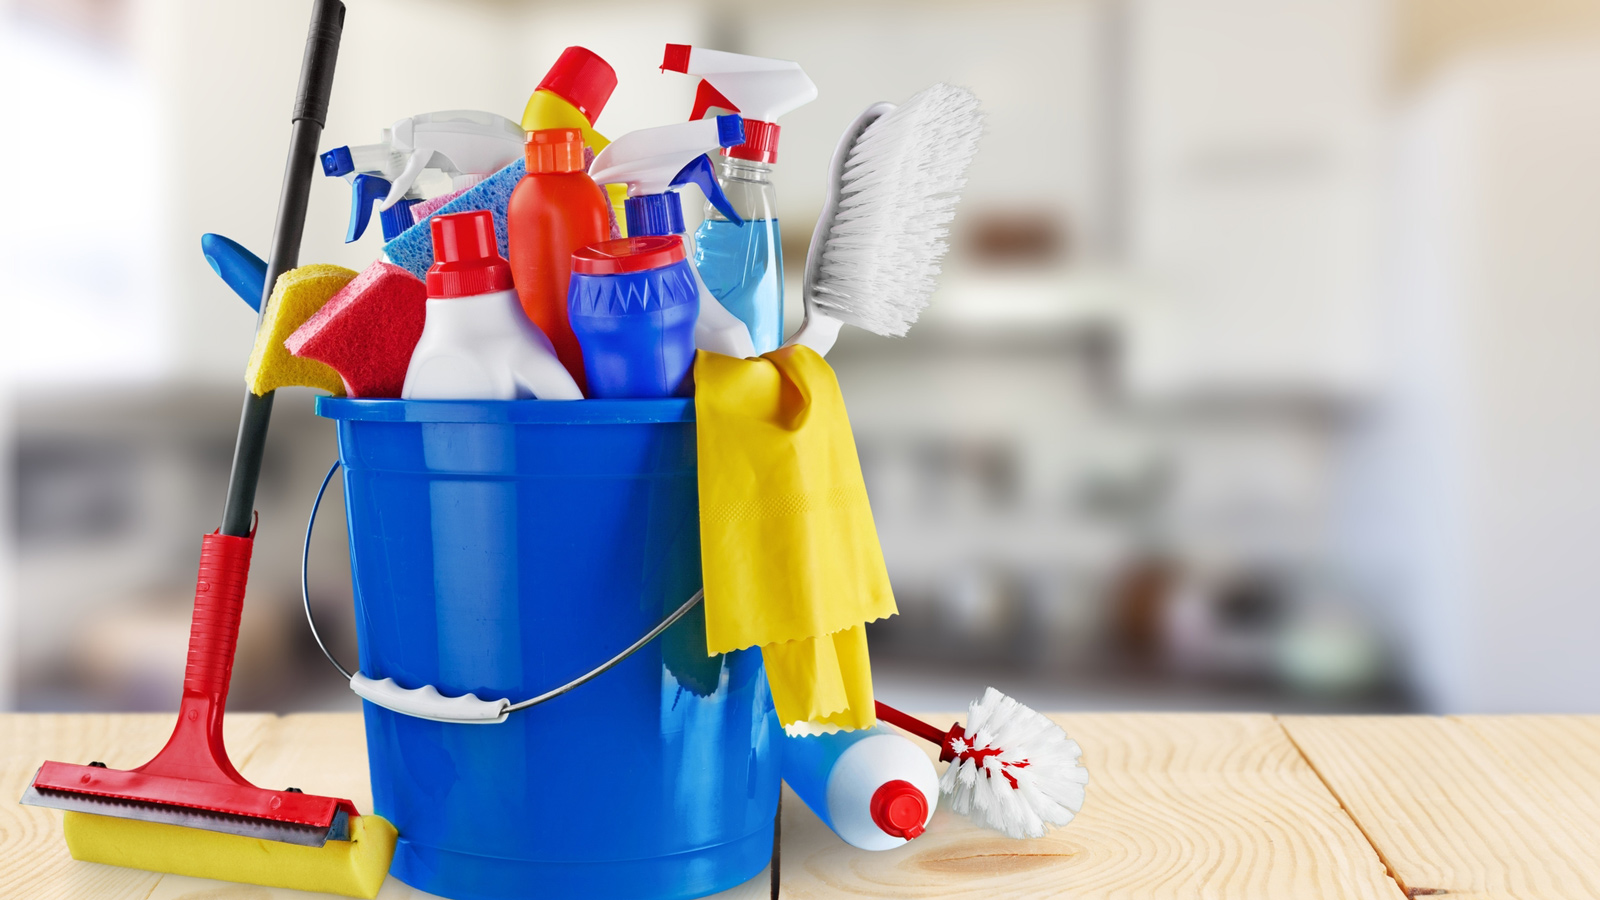 Bucket-of-cleaning-tools.jpg